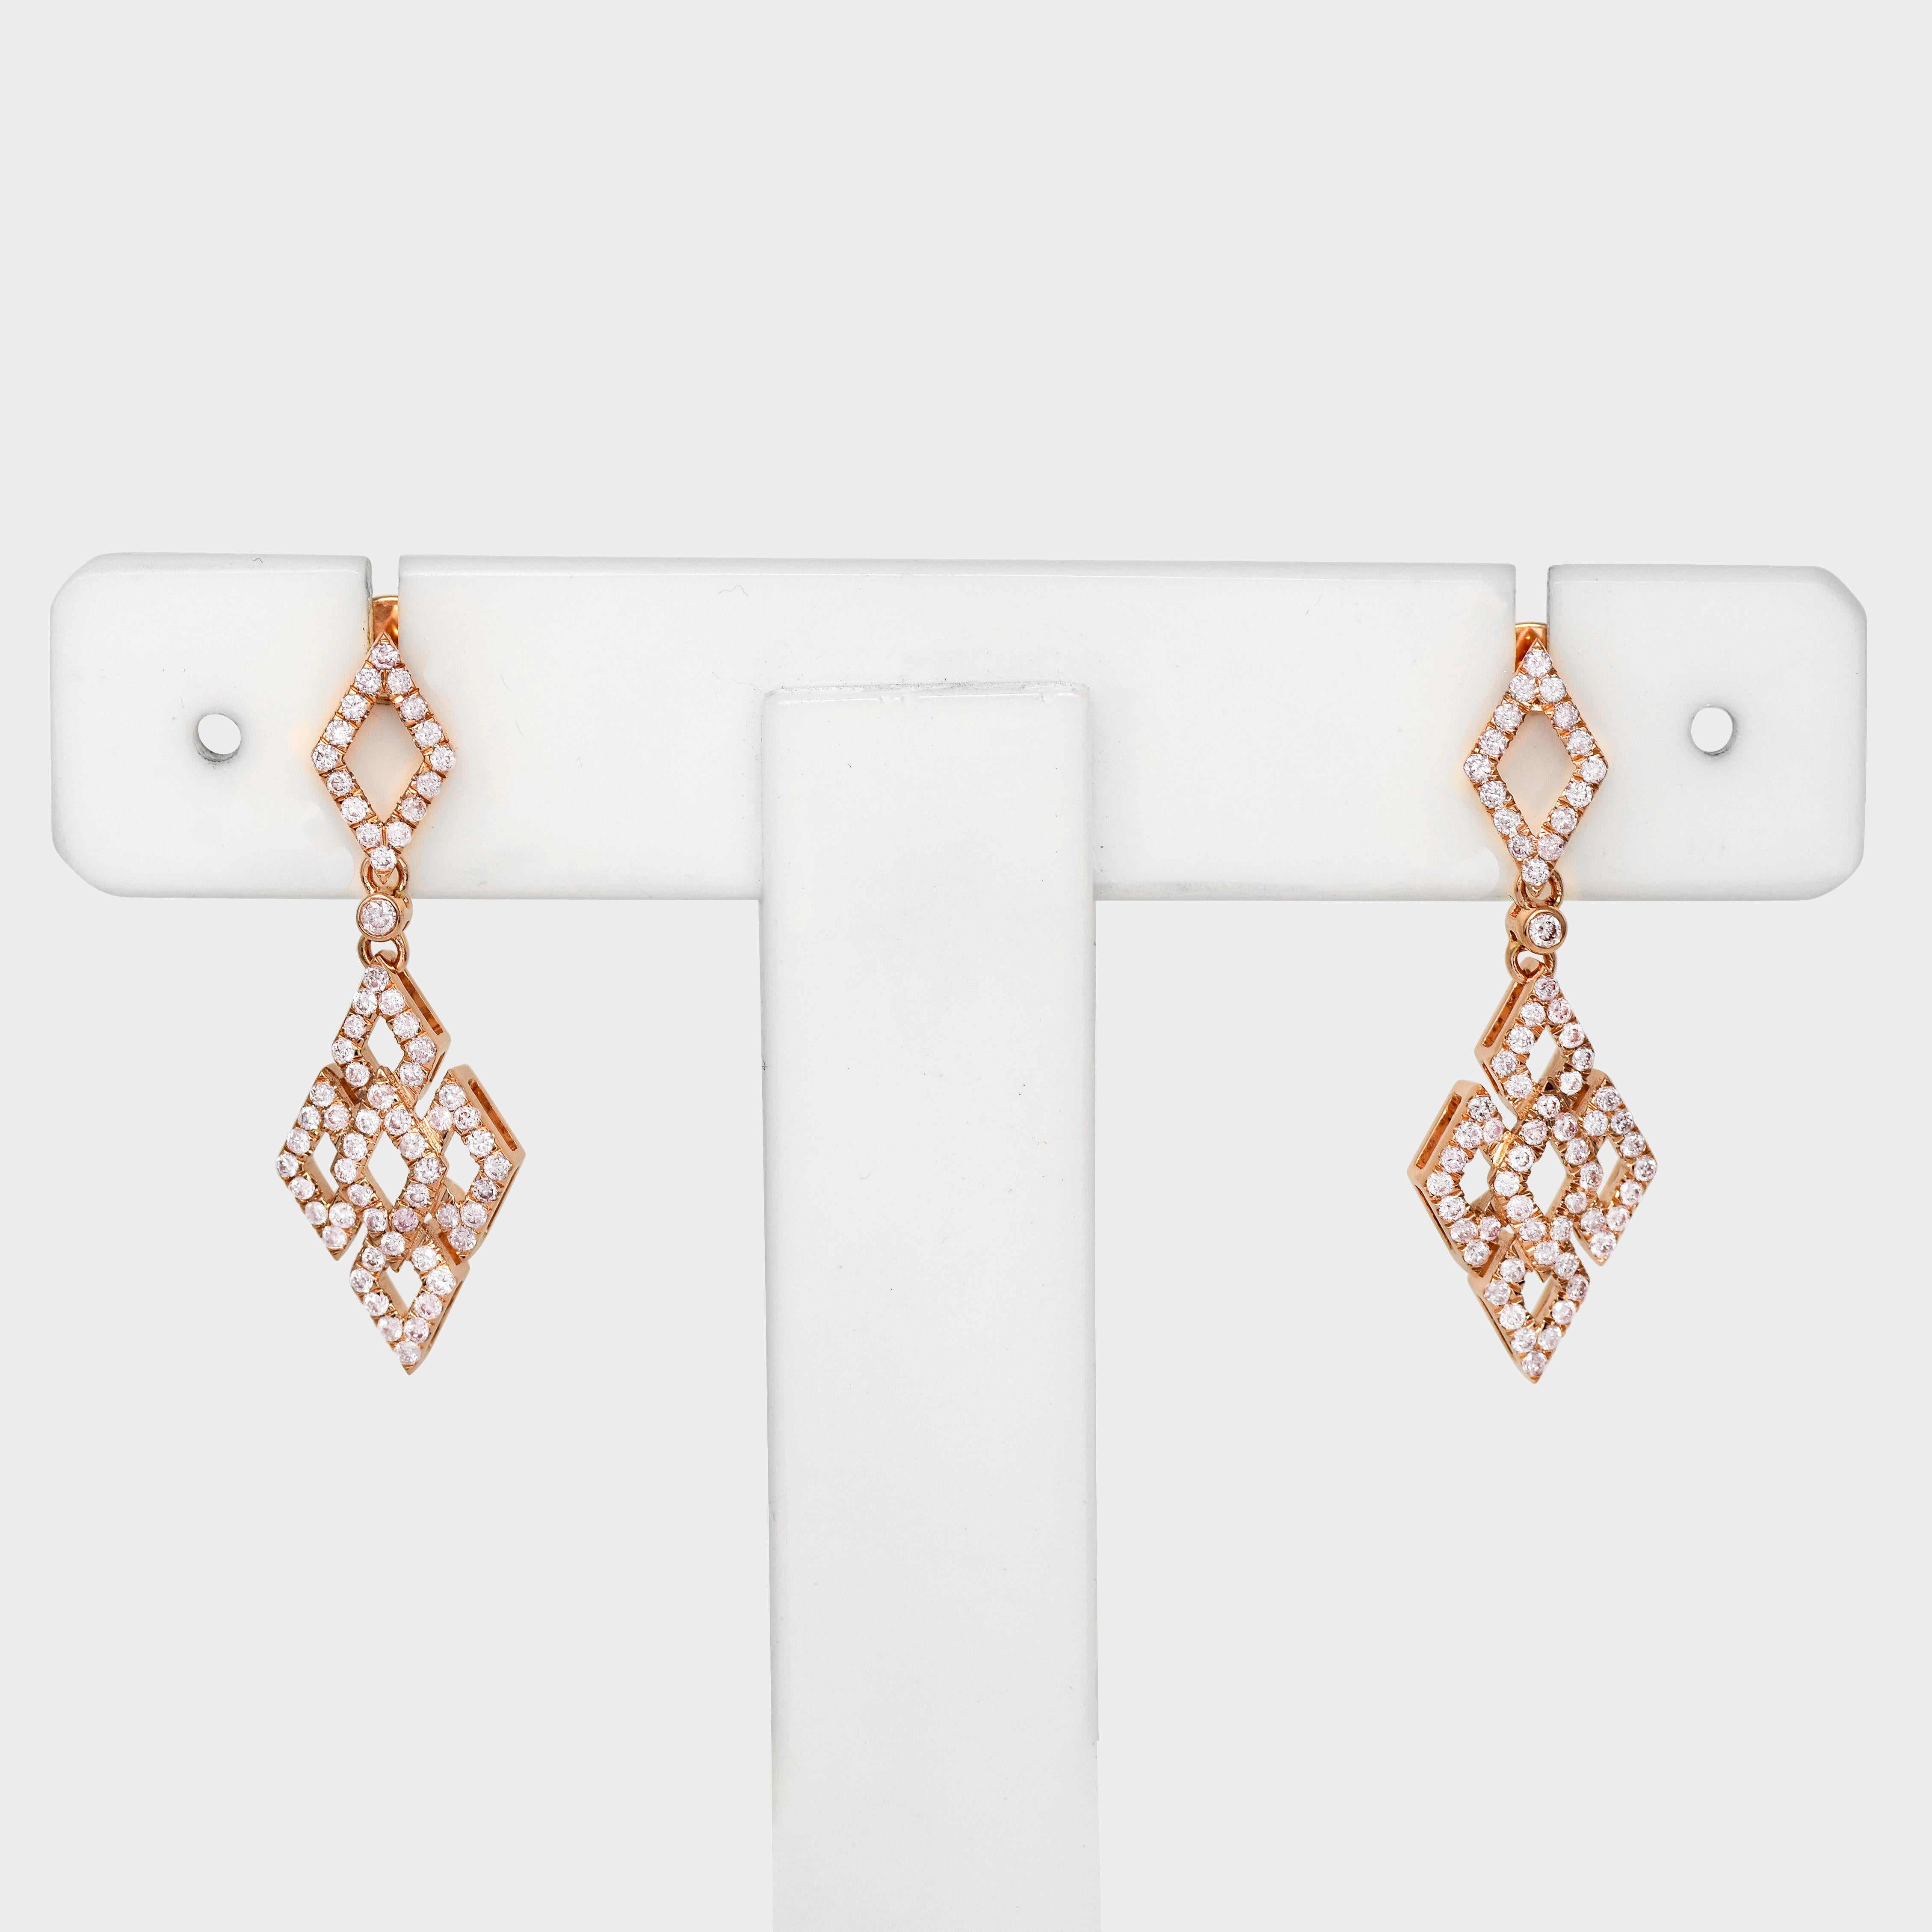 Contemporary IGI 14K 0.95 ct Natural Pink Diamonds Art Deco Design Stud Earrings For Sale